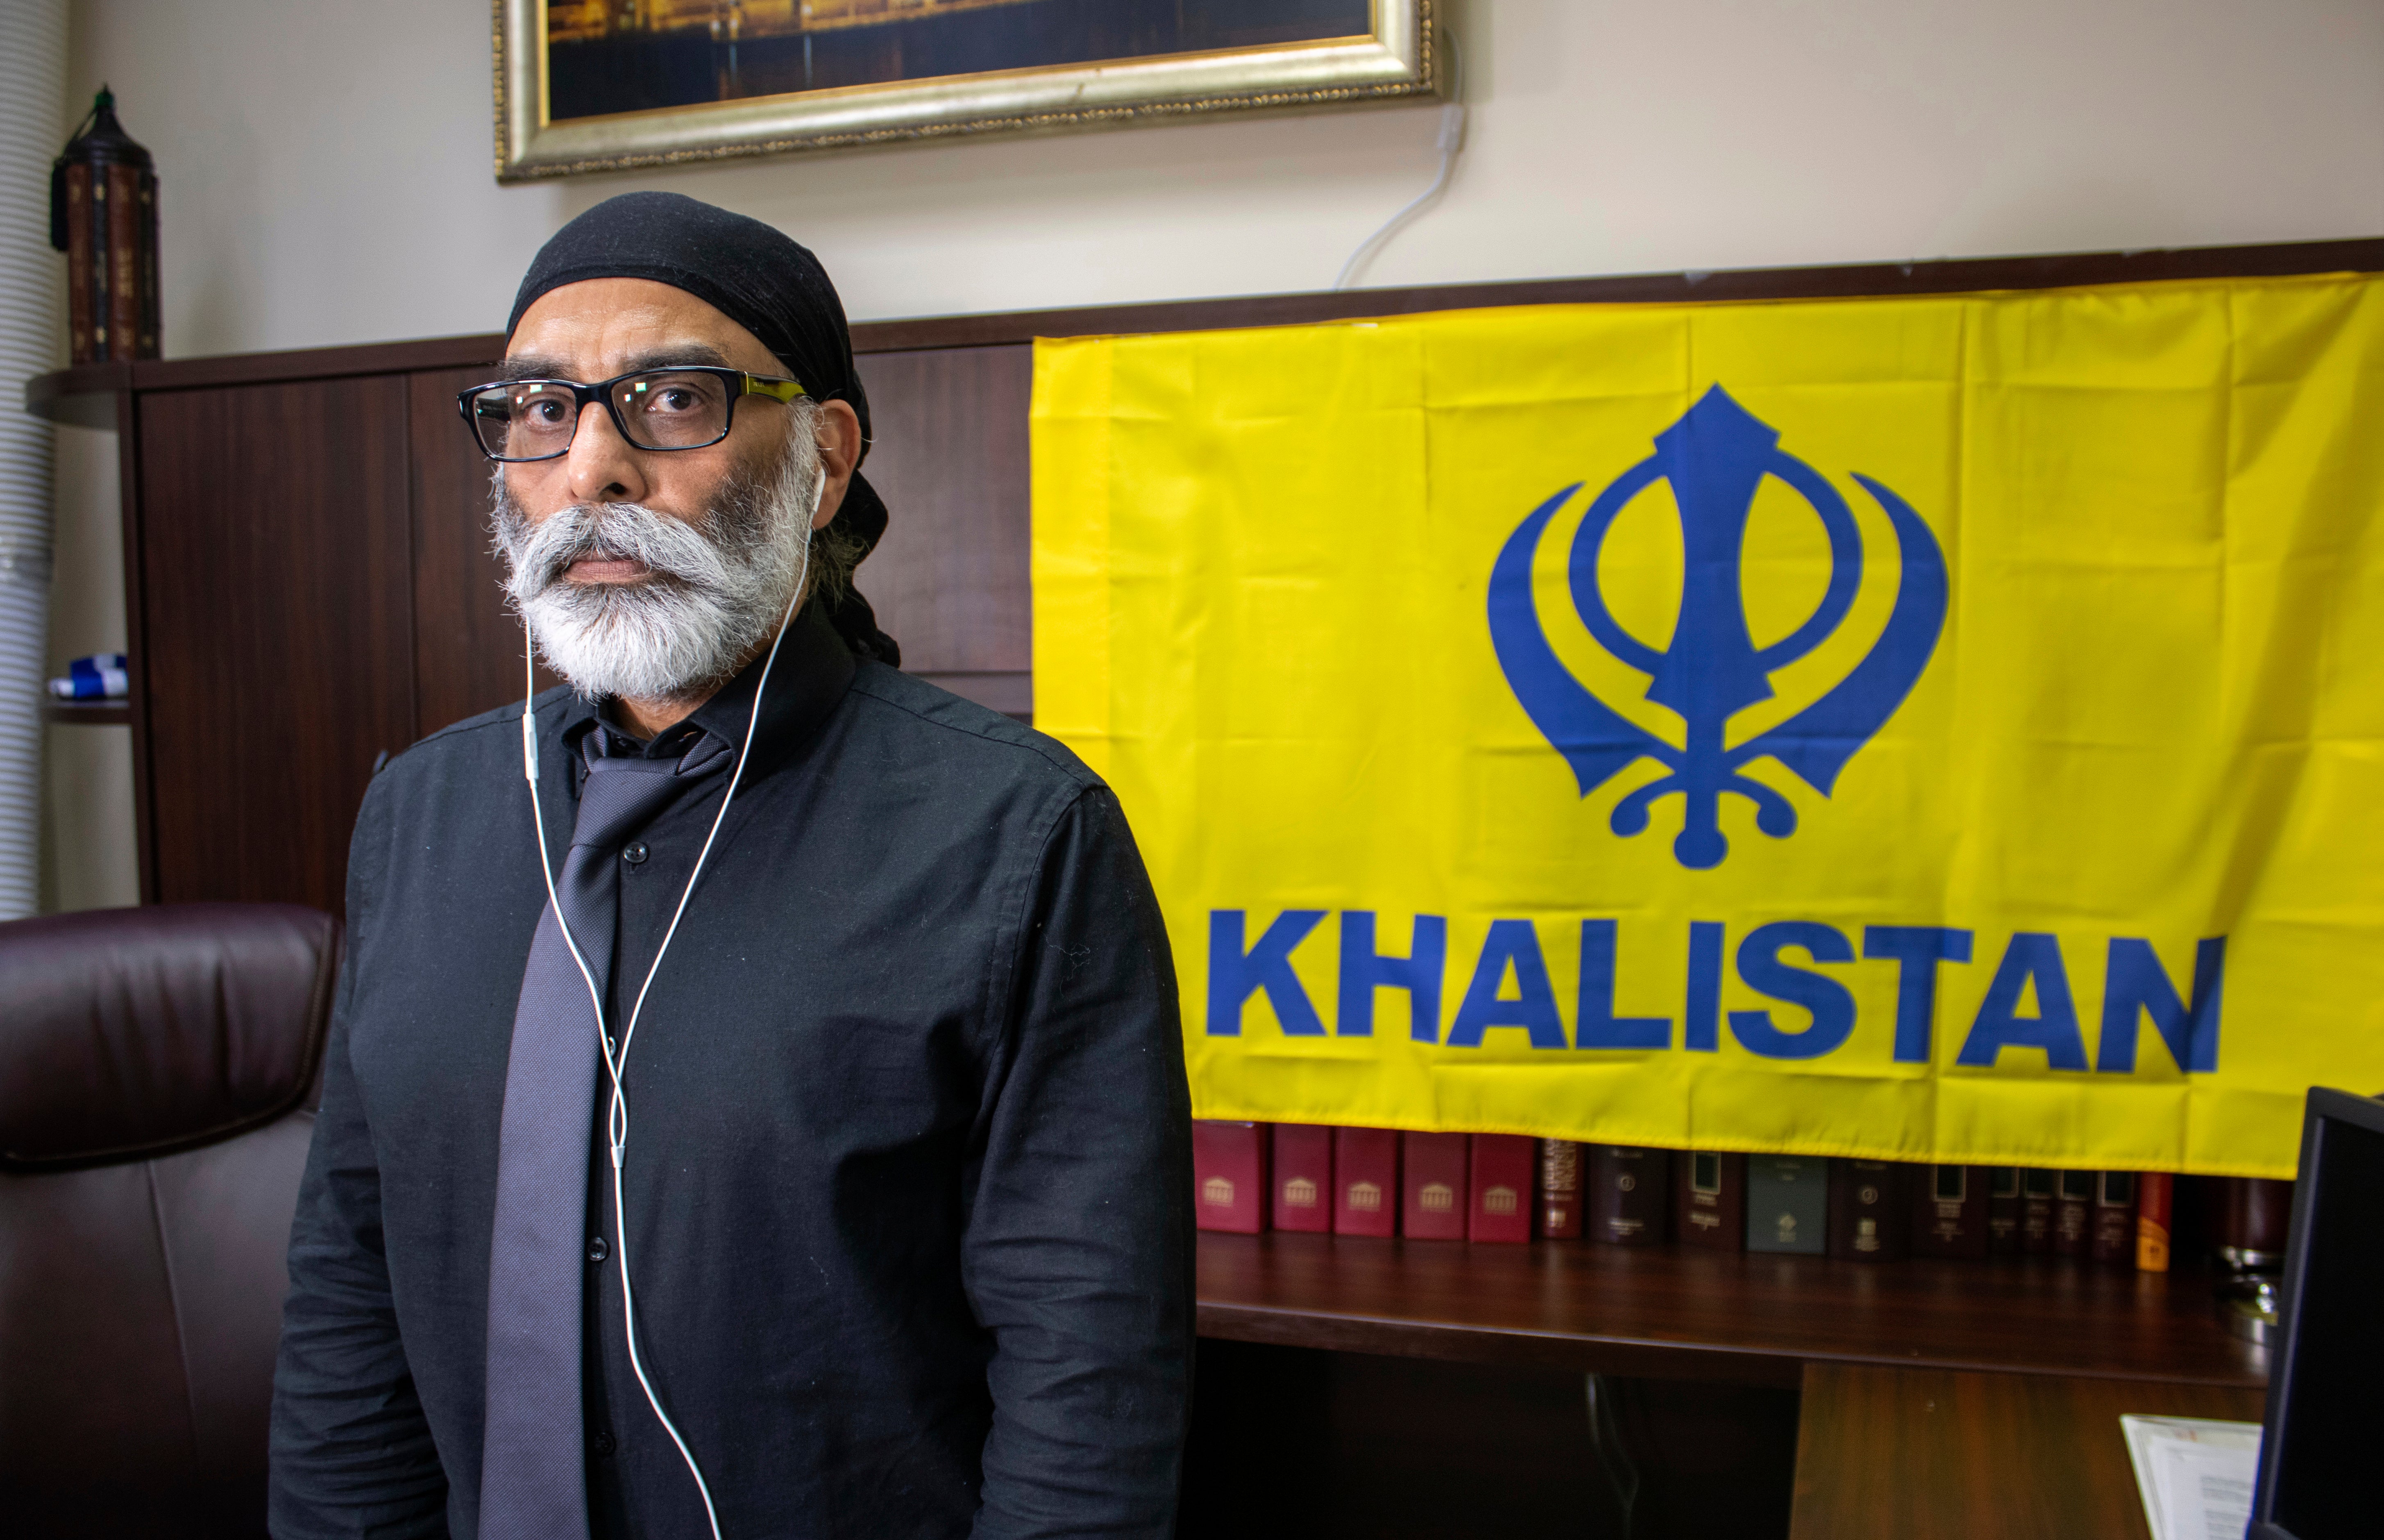 Sikh separatist leader Gurpatwant Singh Pannun is pictured in his office on Wednesday